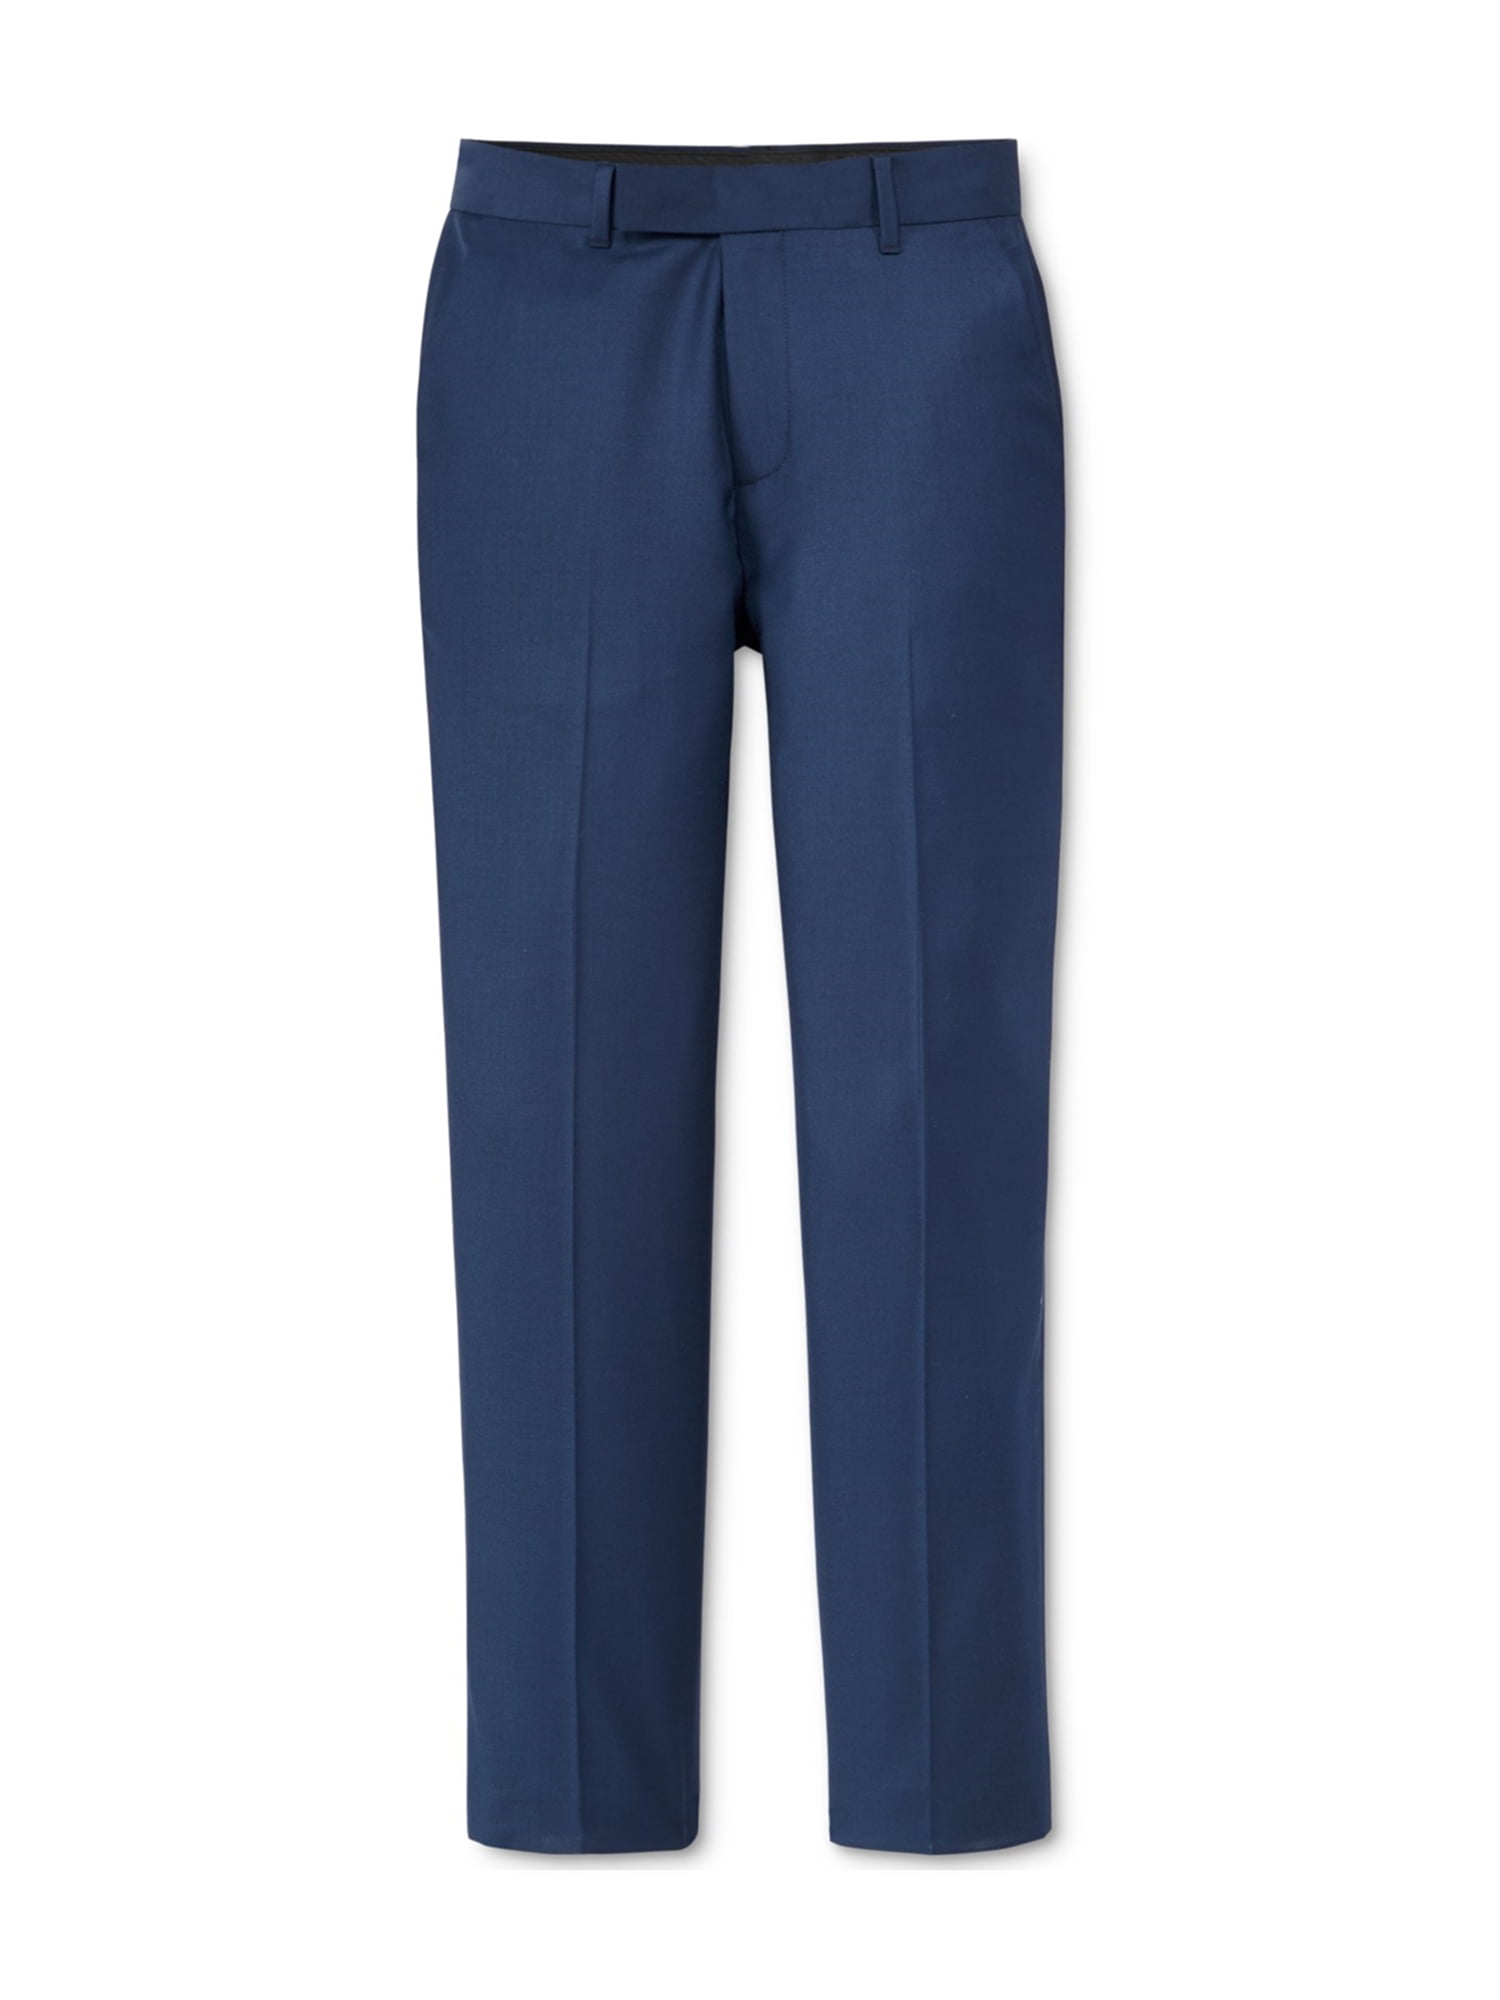 Belt Loops & Functional Front Pockets Straight Leg Fit & Hemmed Bottom Calvin Klein Boys' Flat-Front Suit Dress Pant